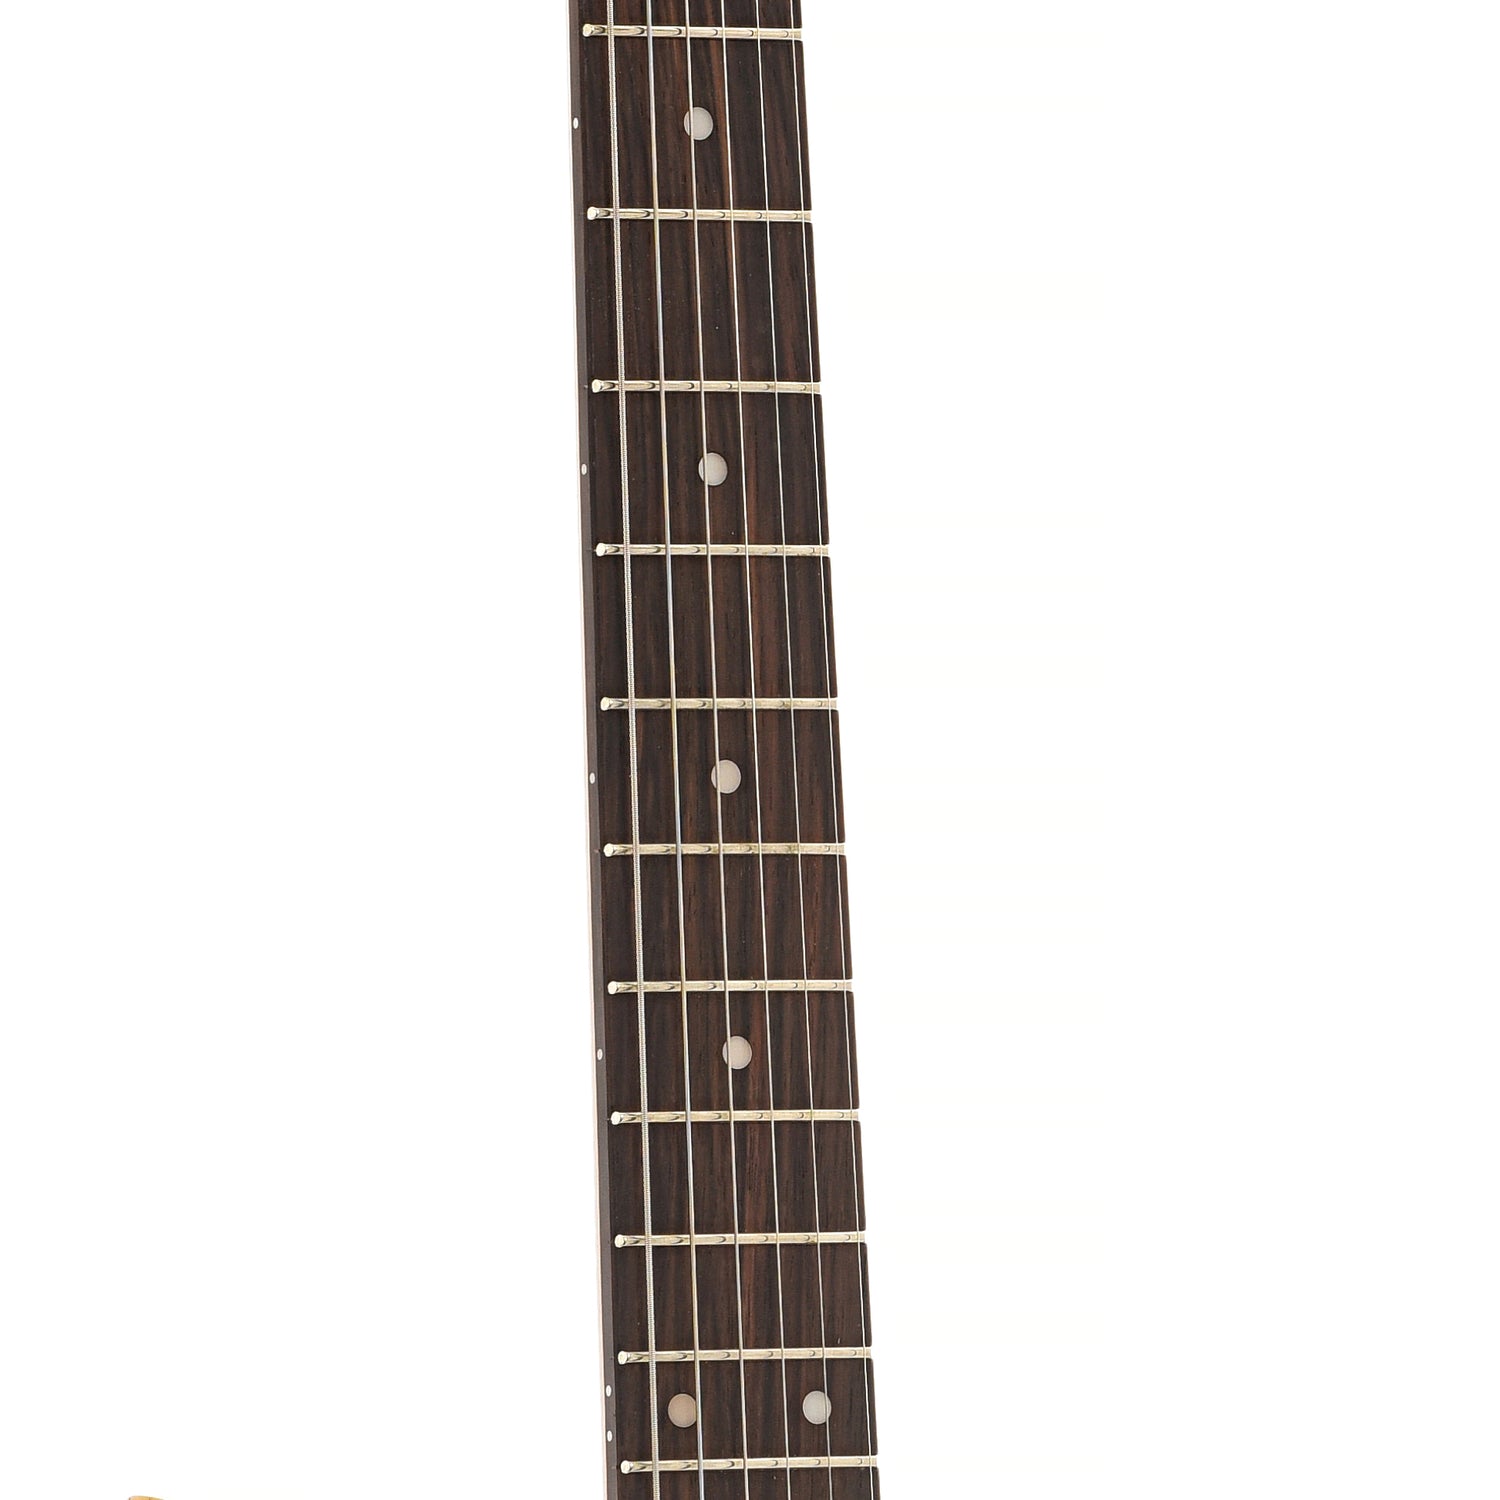 Fretboard of Ibanez Paul Gilbert Signature PGM50 Electric Guitar, Black